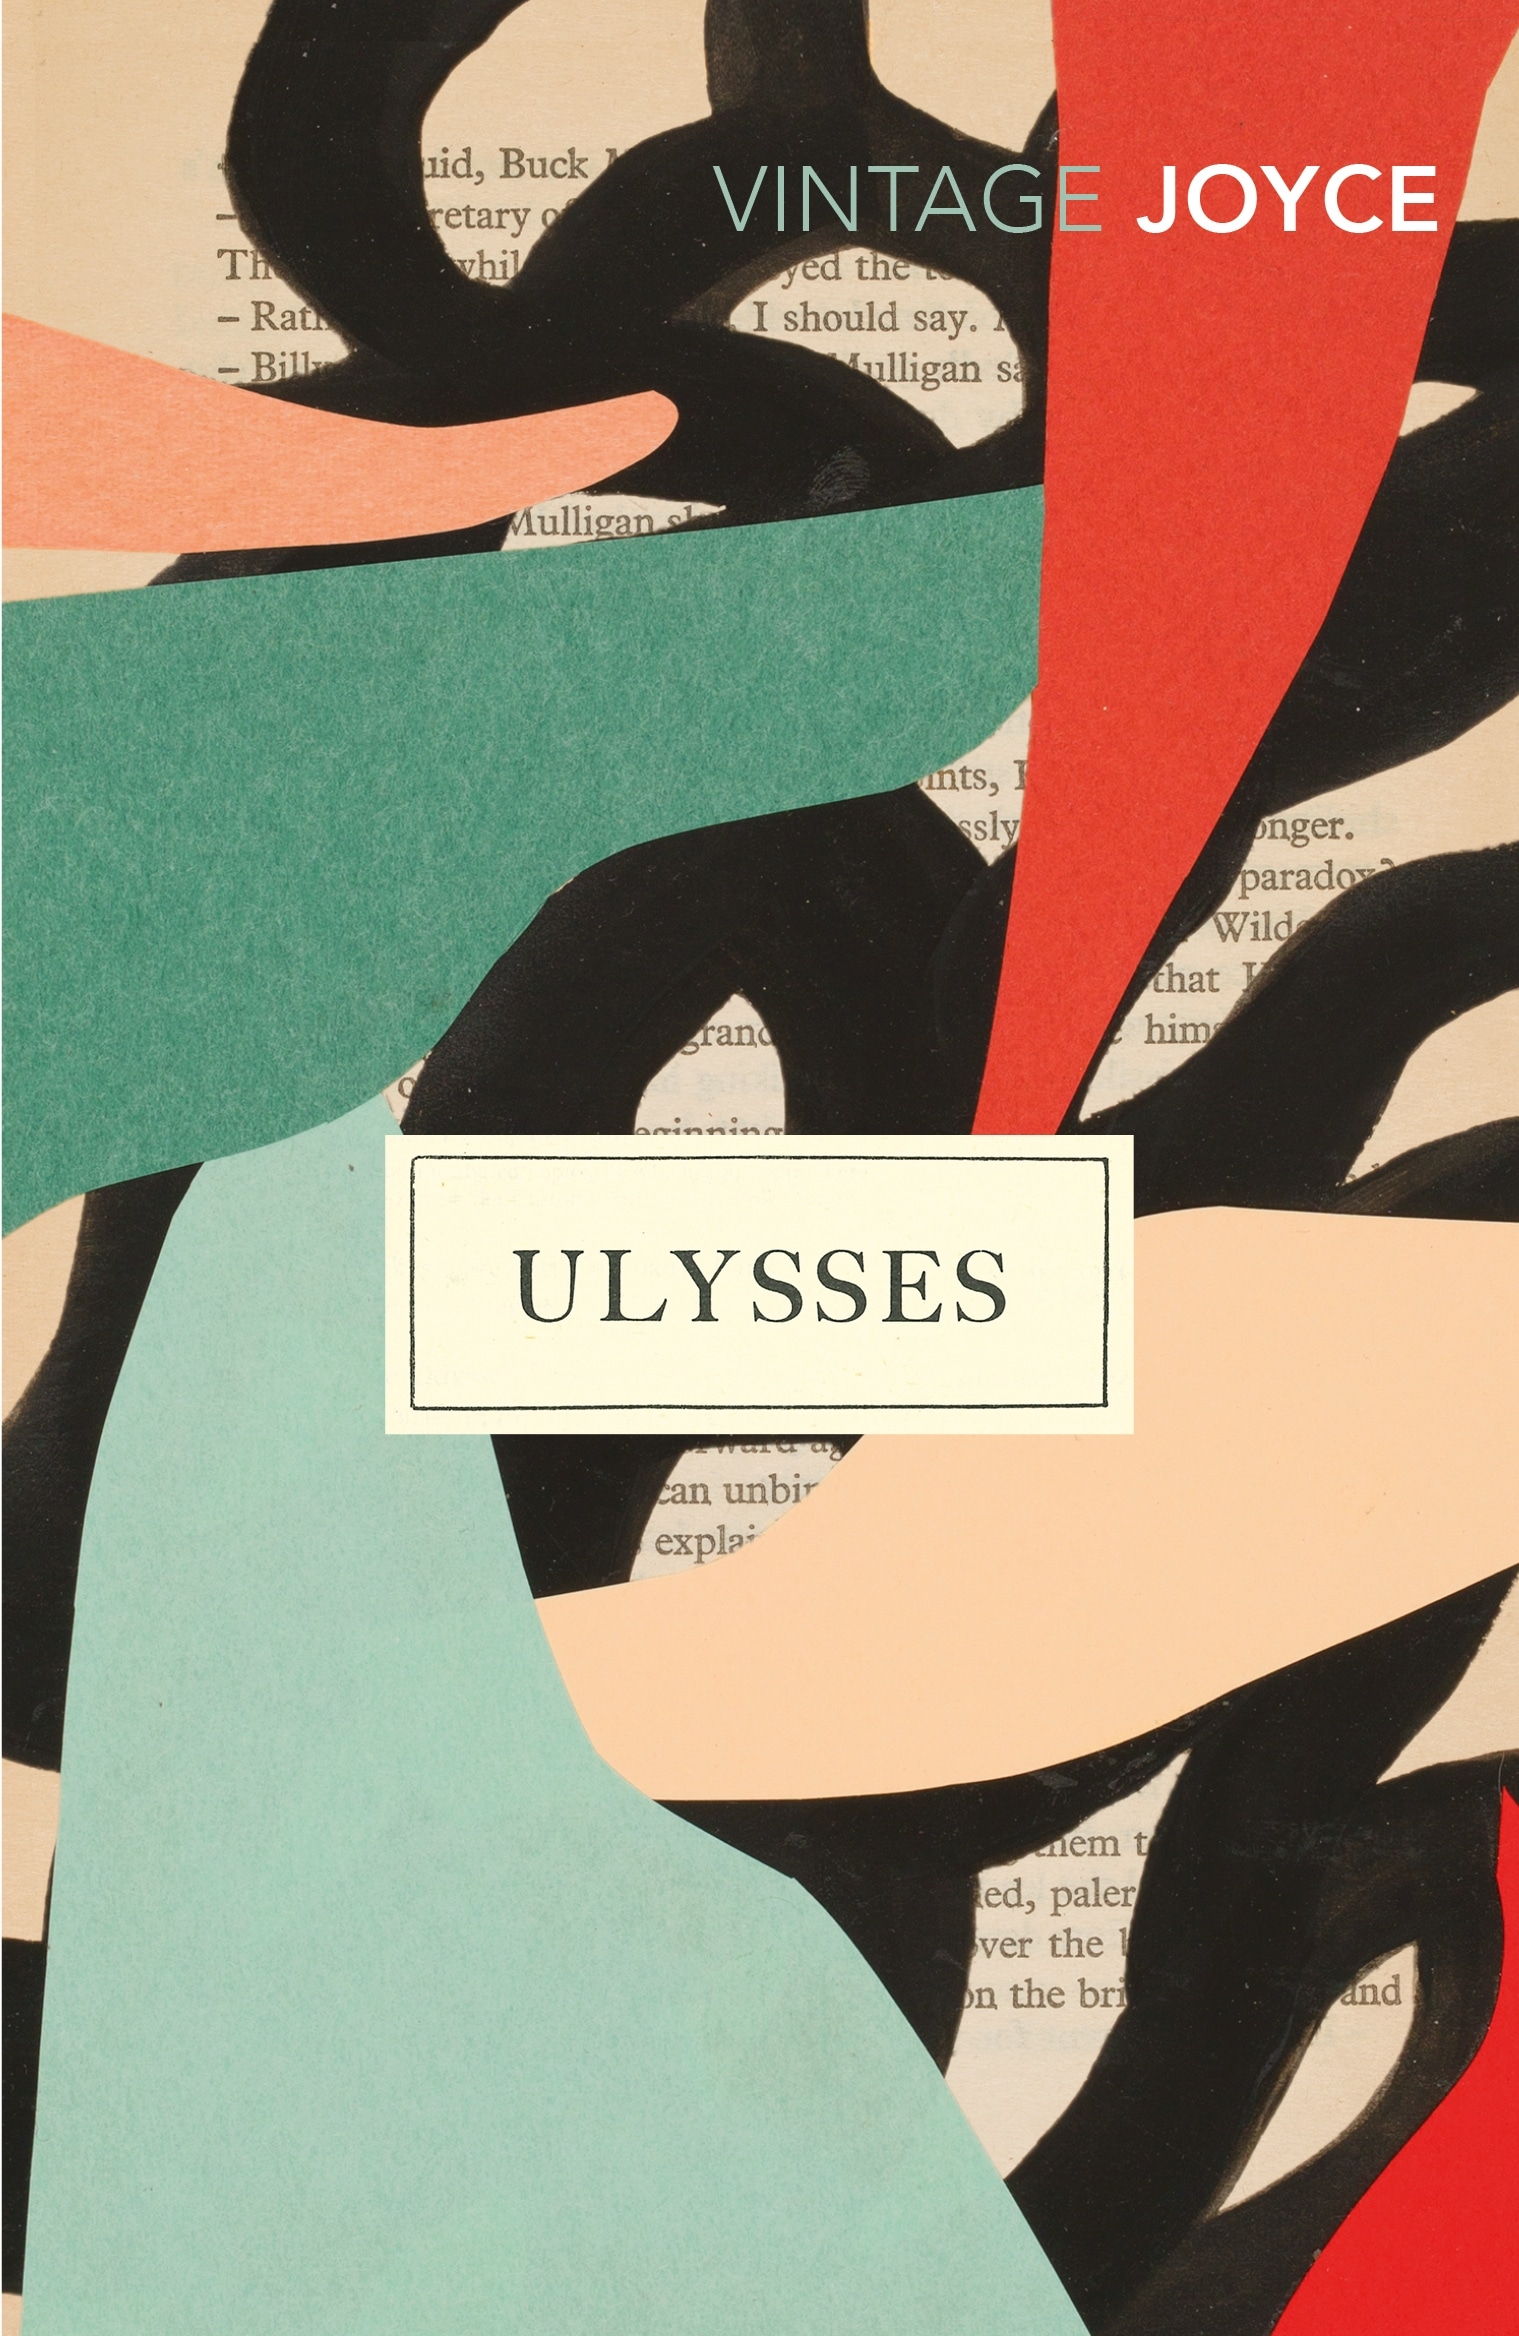 Book “Ulysses” by James Joyce, Hans Walter Gabler — January 20, 2022